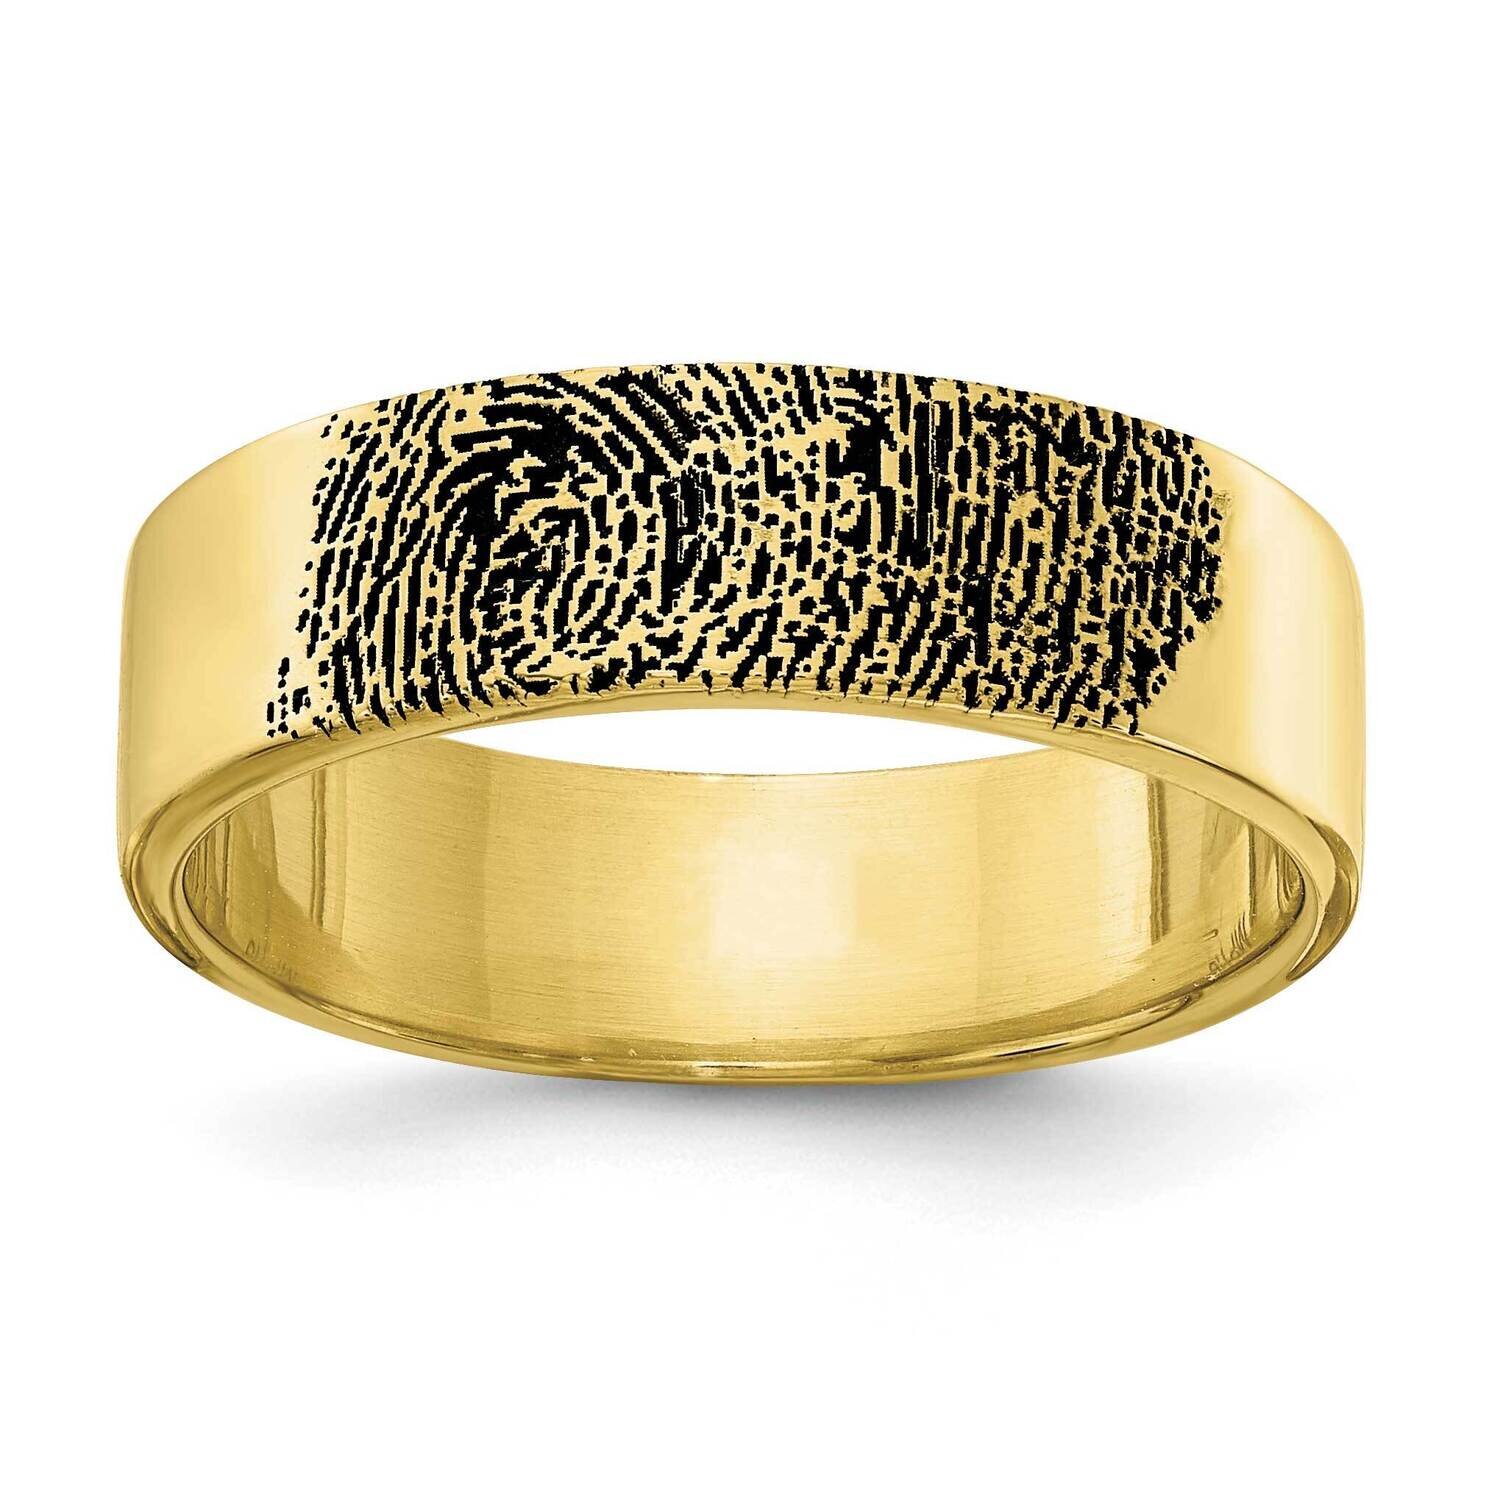 Fingerprint Ring with Name - Memorial Ring